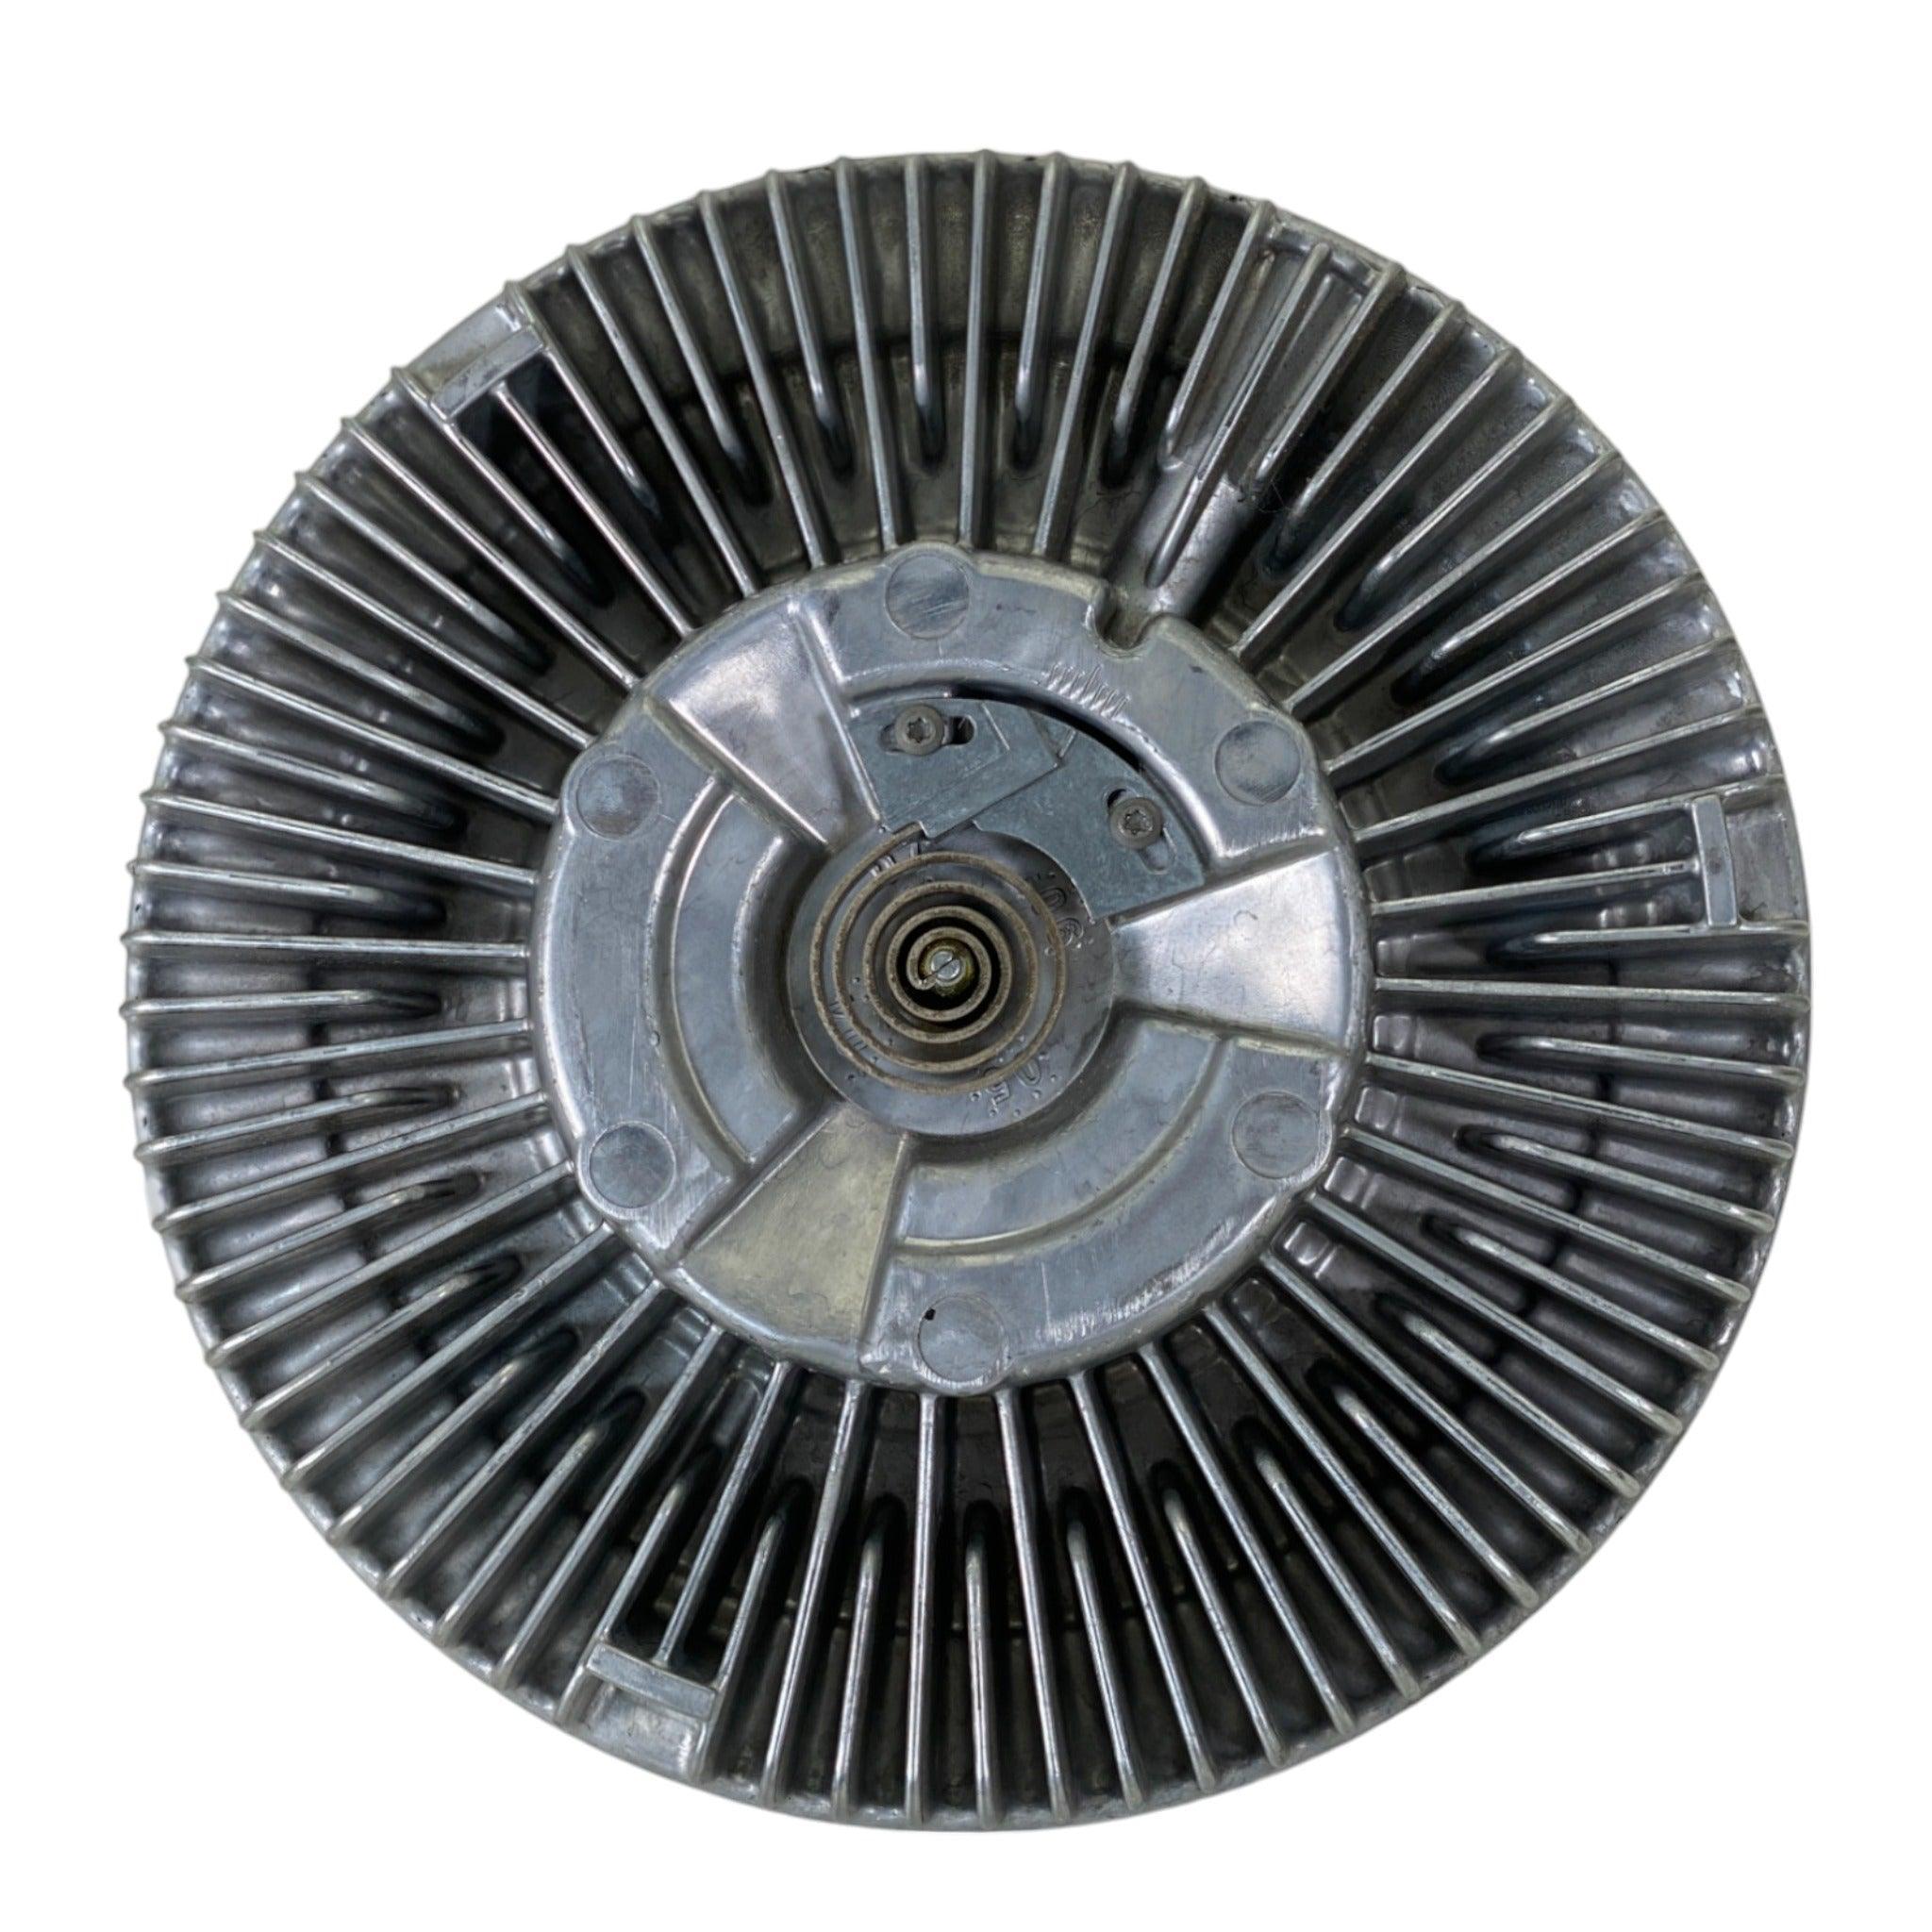 3540985C3 Genuine International Engine Fan Clutch For Dt466 Series Engines - ADVANCED TRUCK PARTS